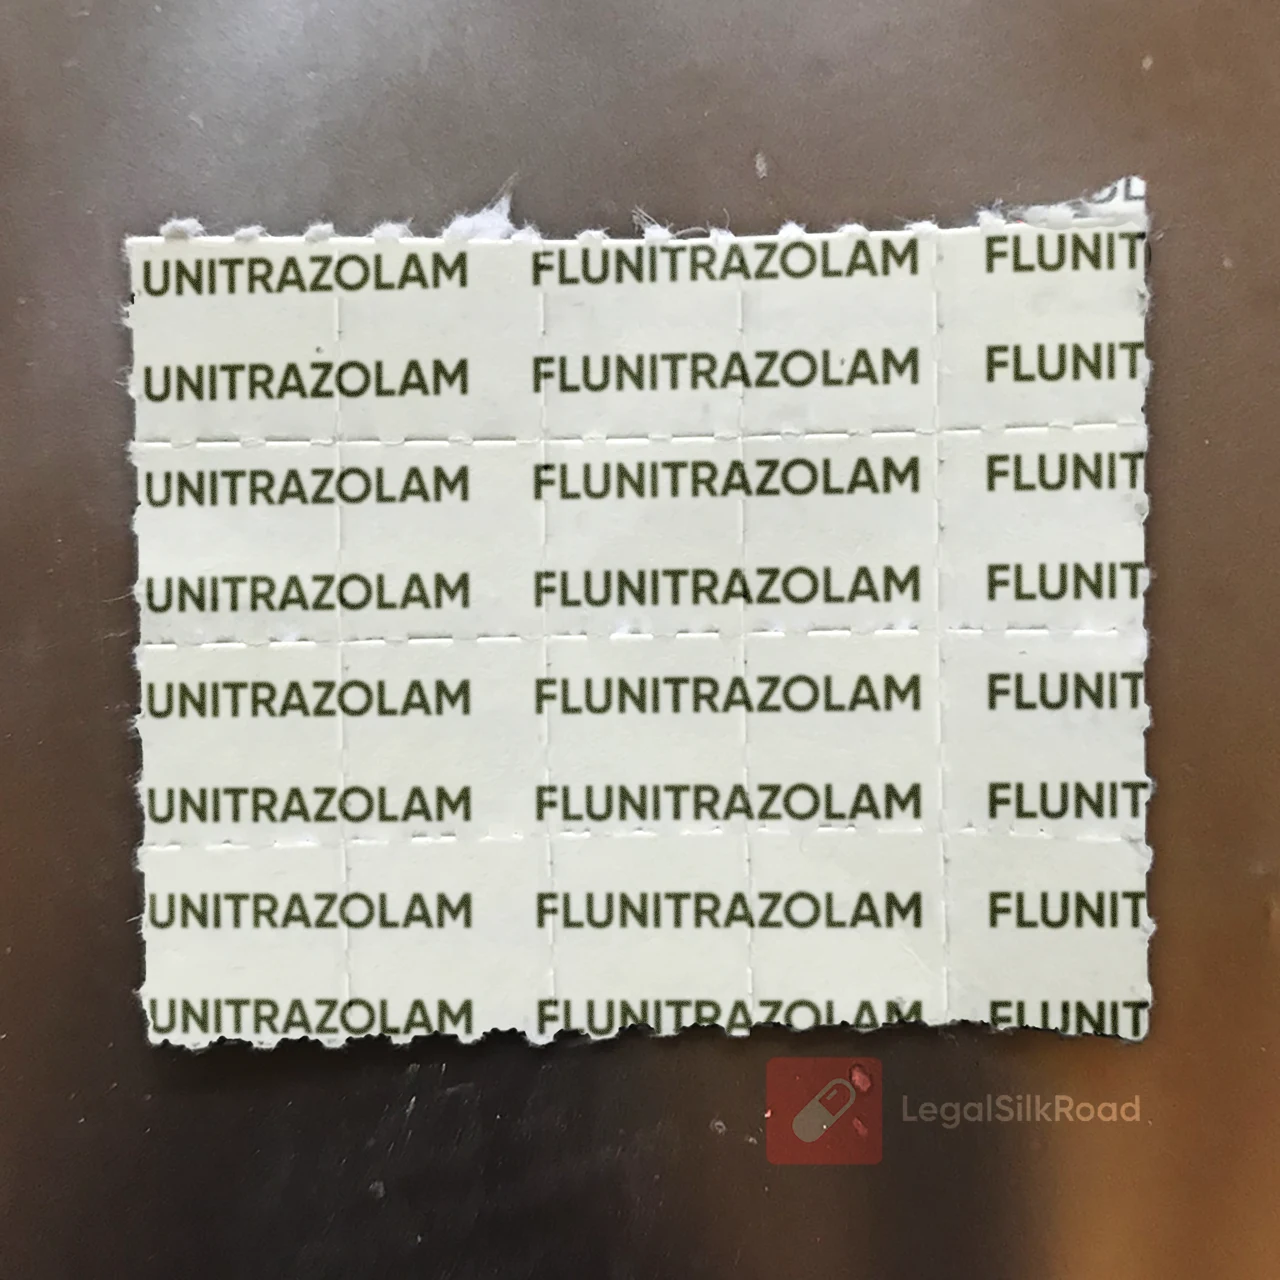 Flunitrazolam blotters